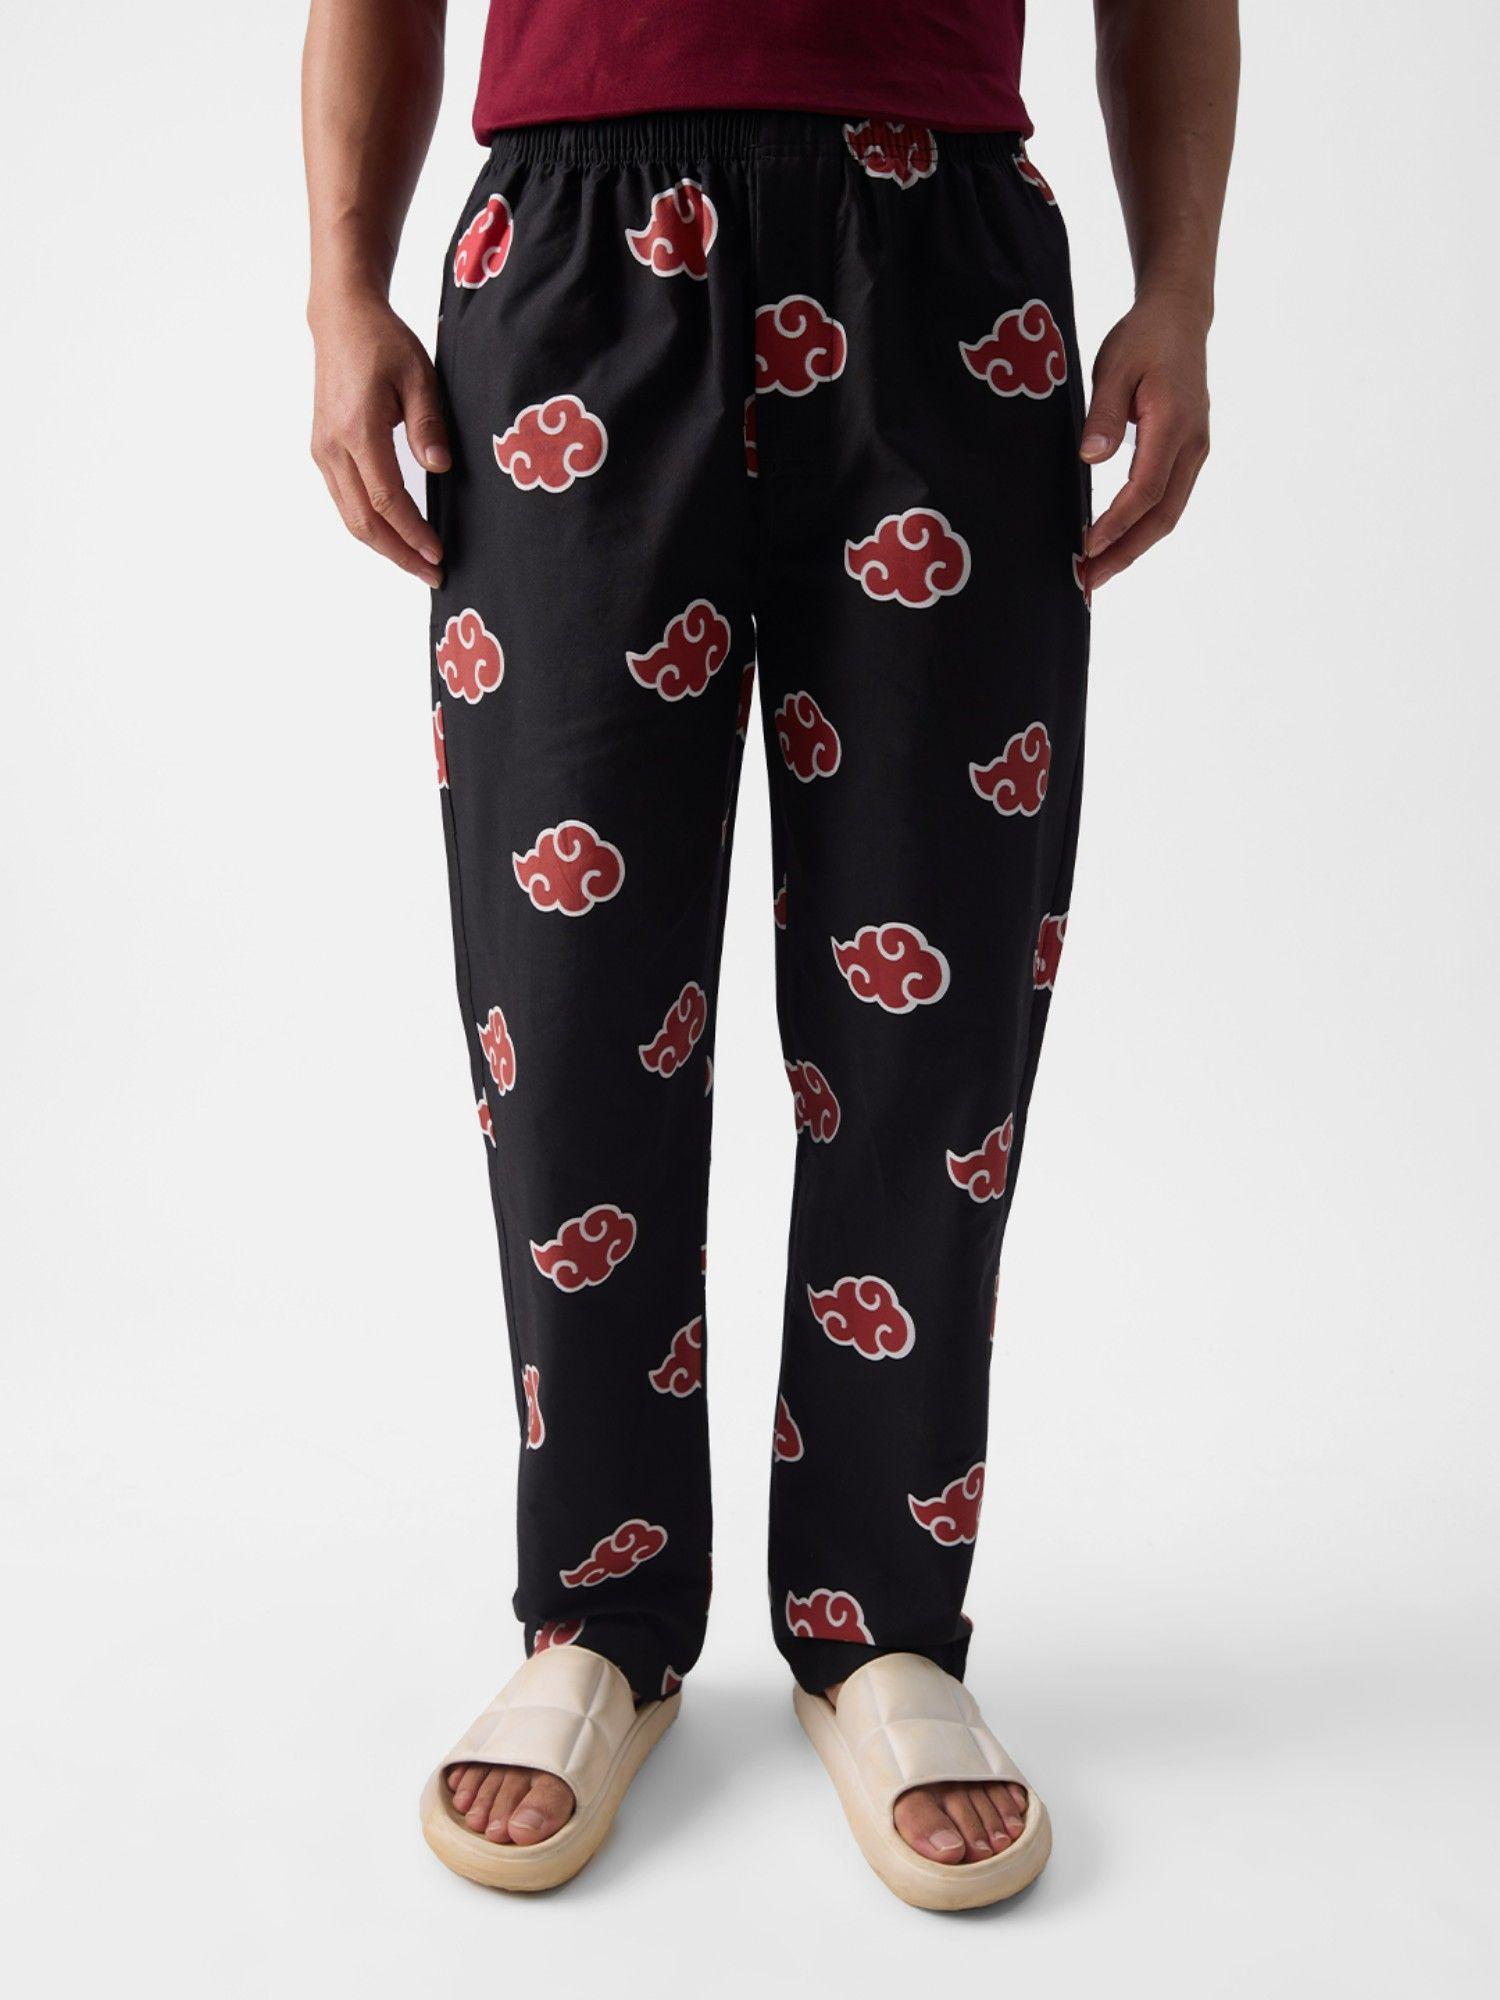 naruto: akatsuki pattern pajamas for mens